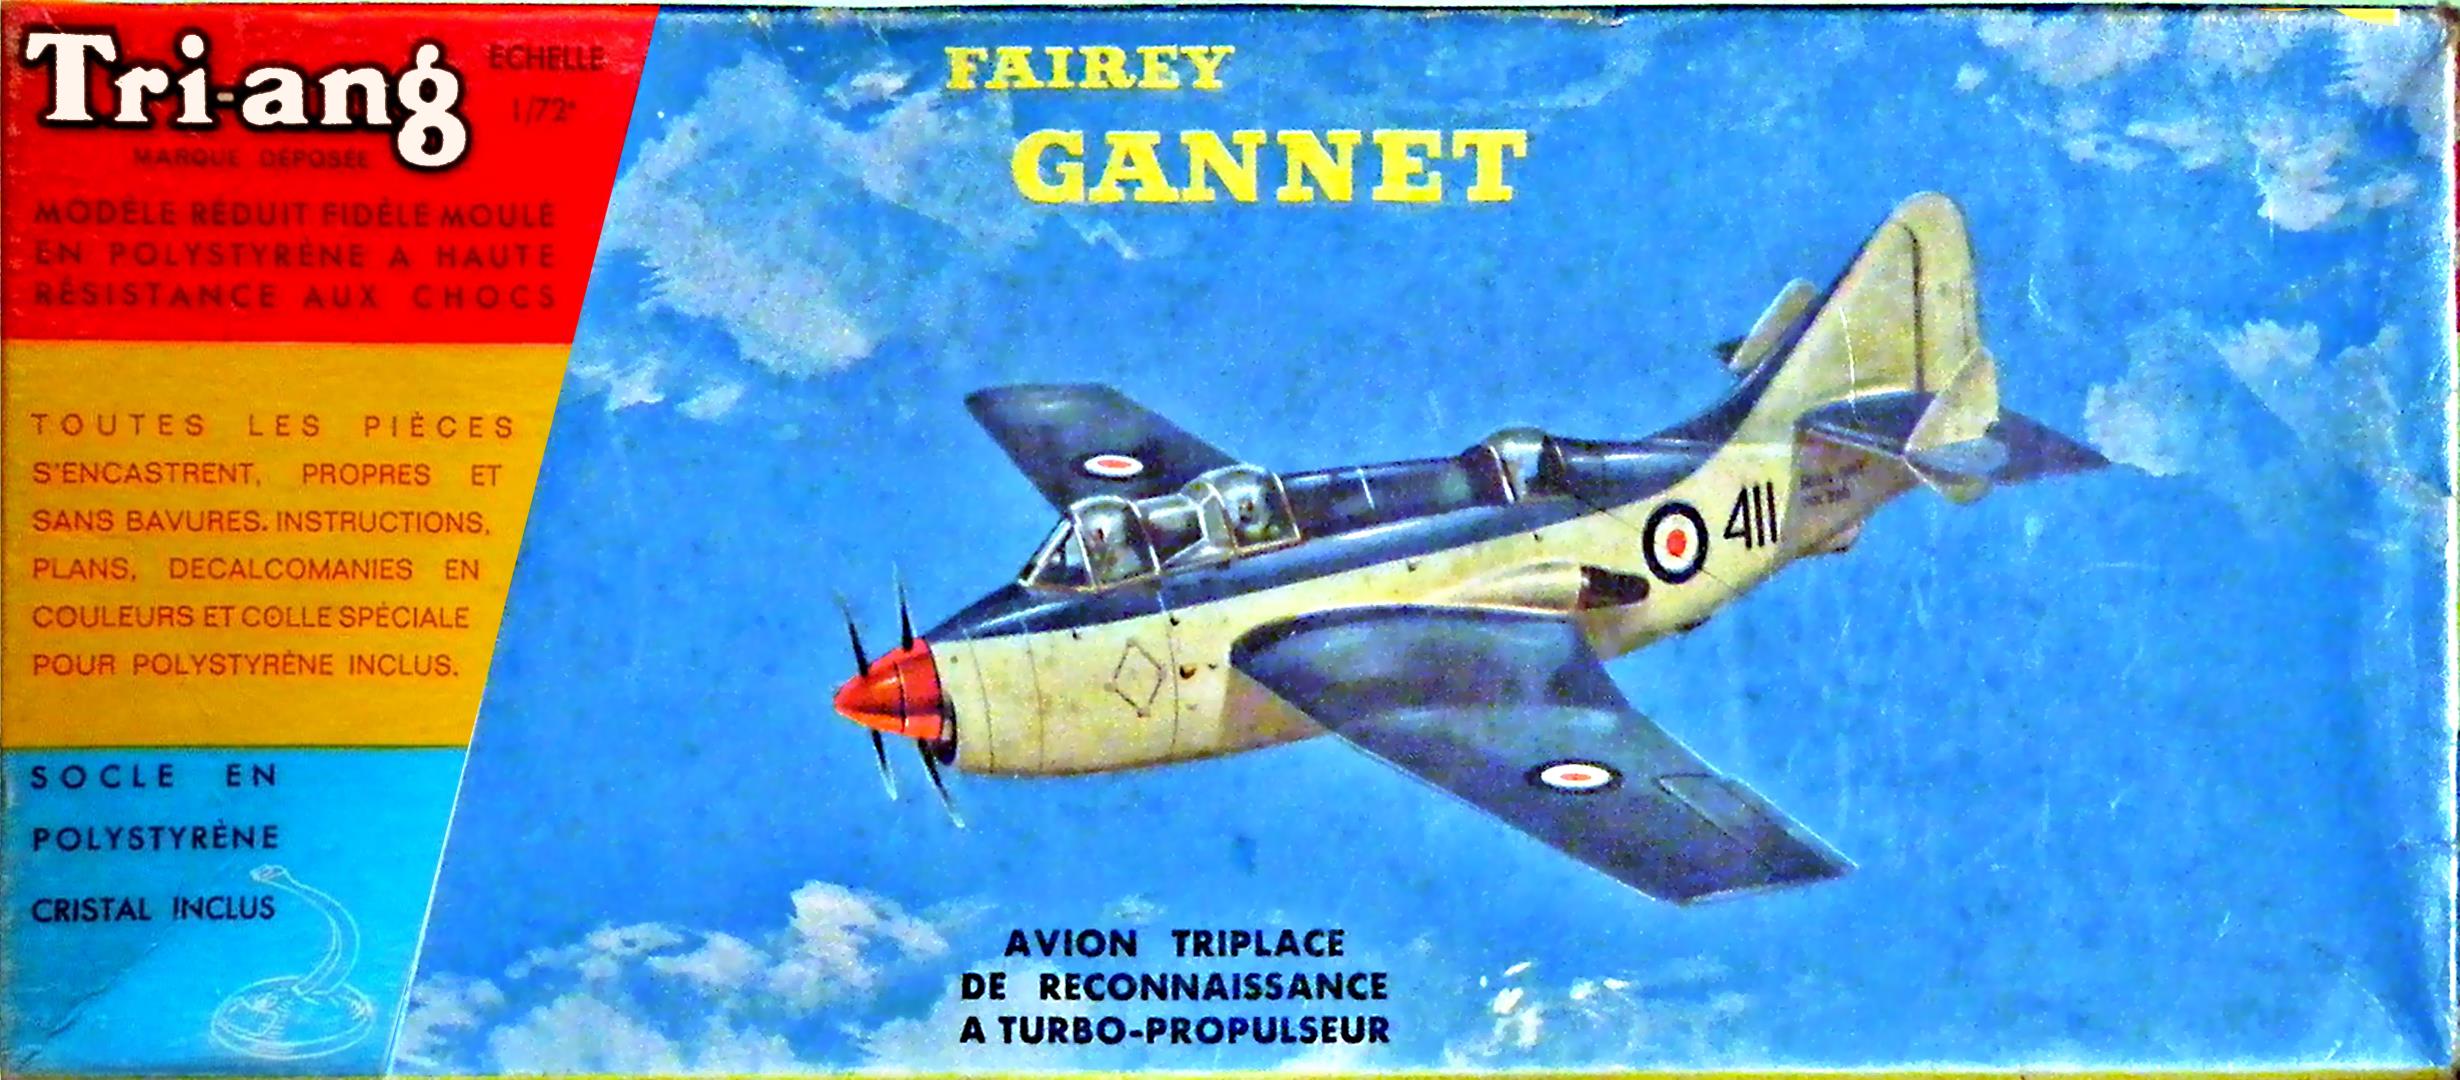 Верх коробки Tri-ang 331P Fairey Gannet avion triplace de reconnaissance a turbo-propulseur,